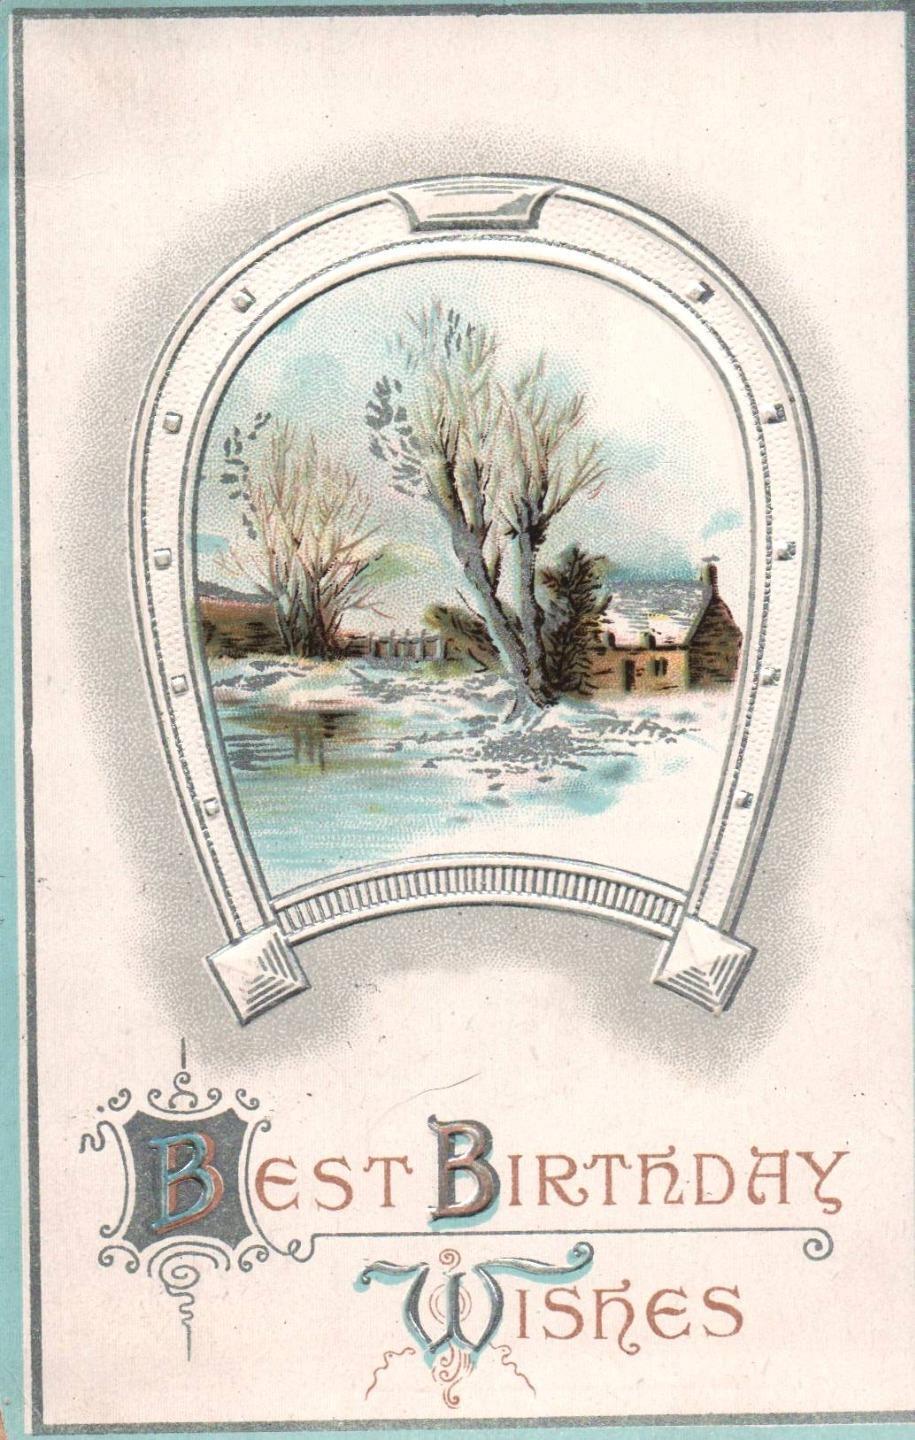 Snow-Covered COTTAGES On Wonderful Vintage 1912 BIRTHDAY Postcard